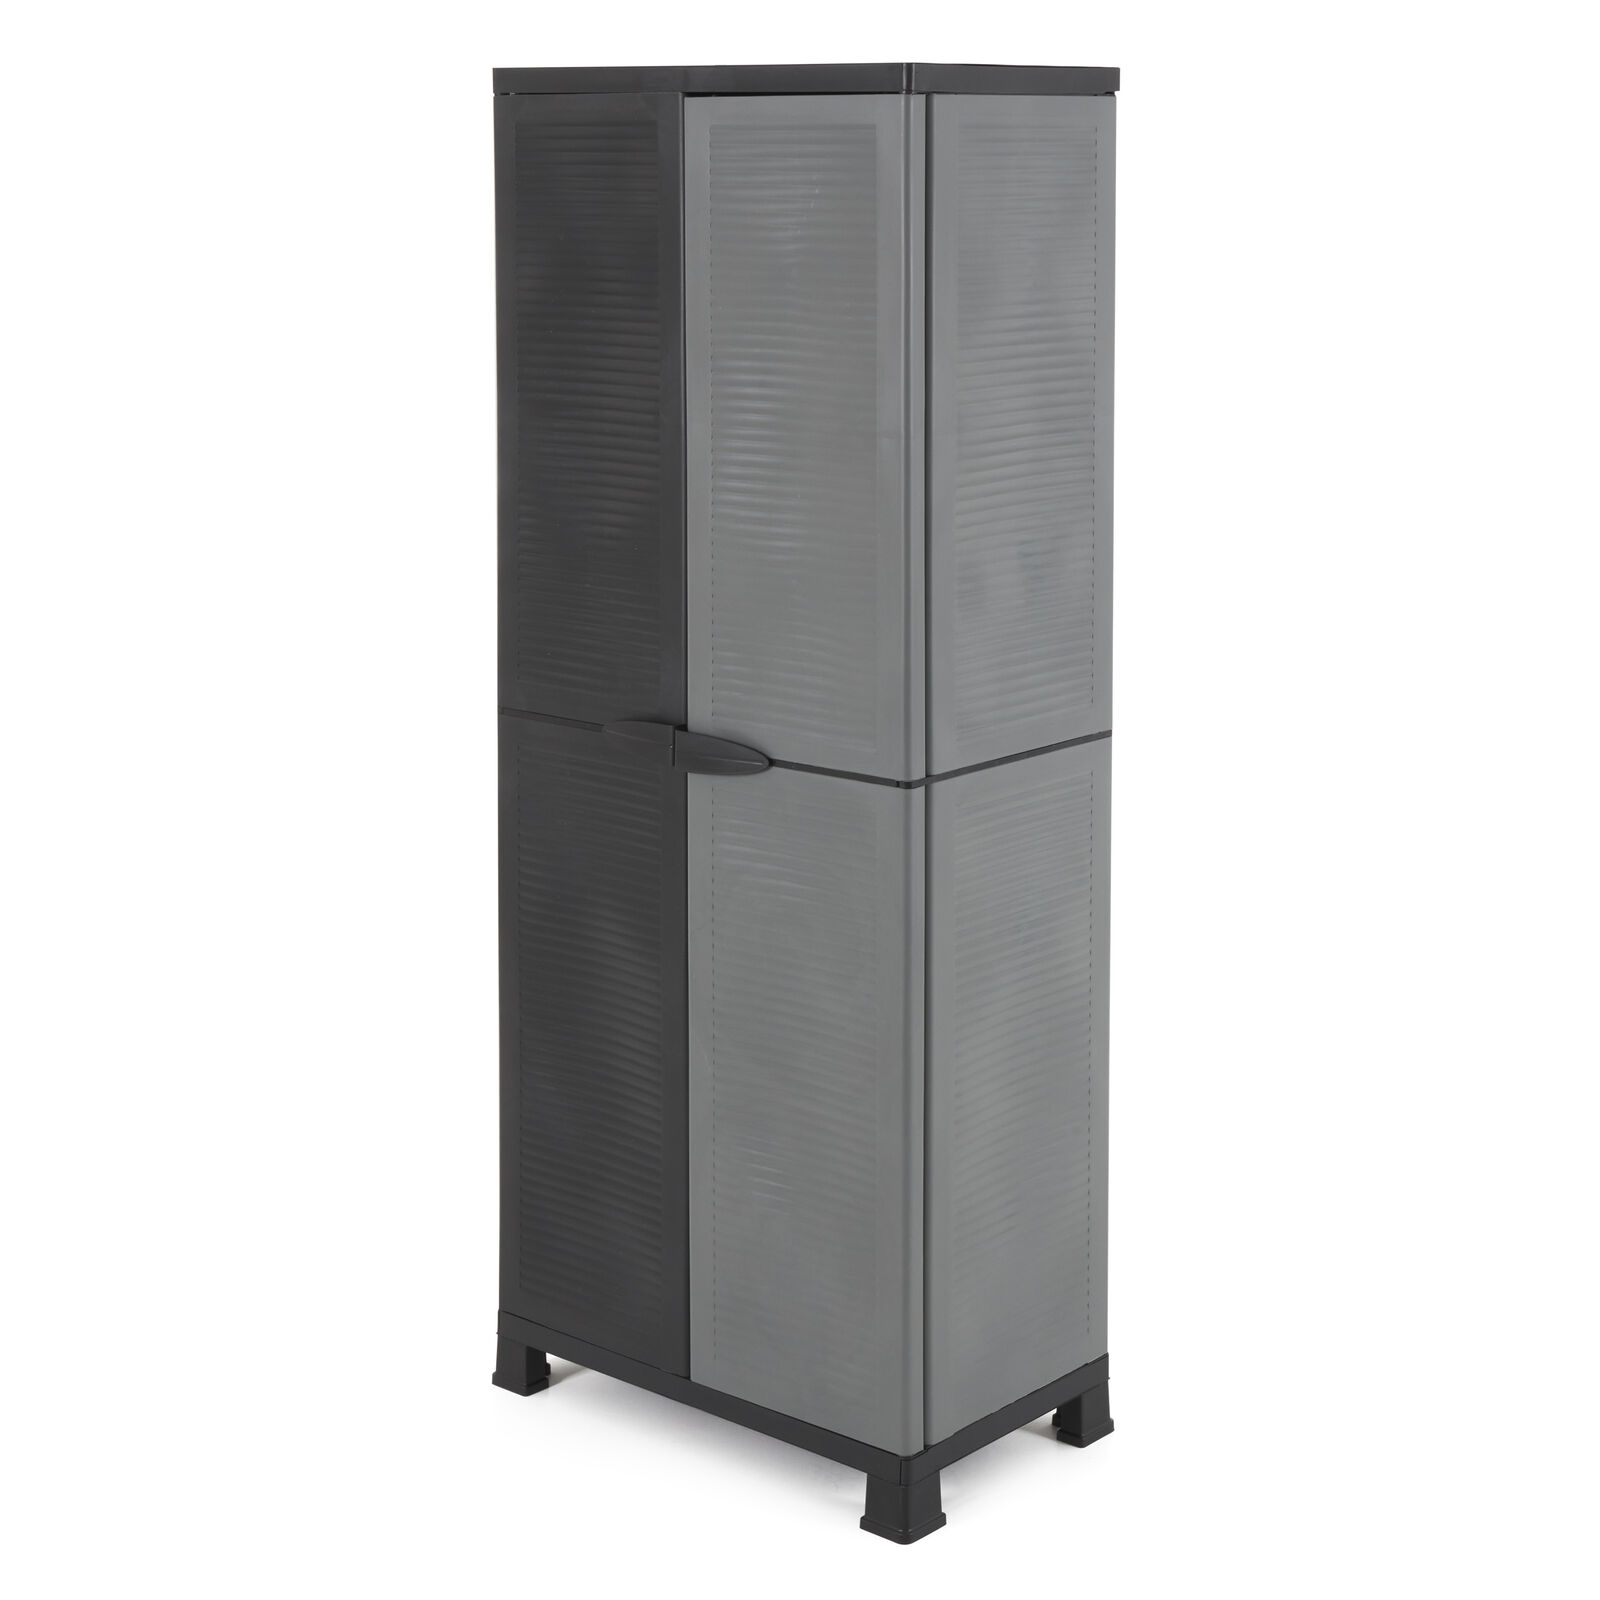 RAM Quality Products UTILITY 3 Shelf Lockable Storage Cabinet, Black (Open Box)